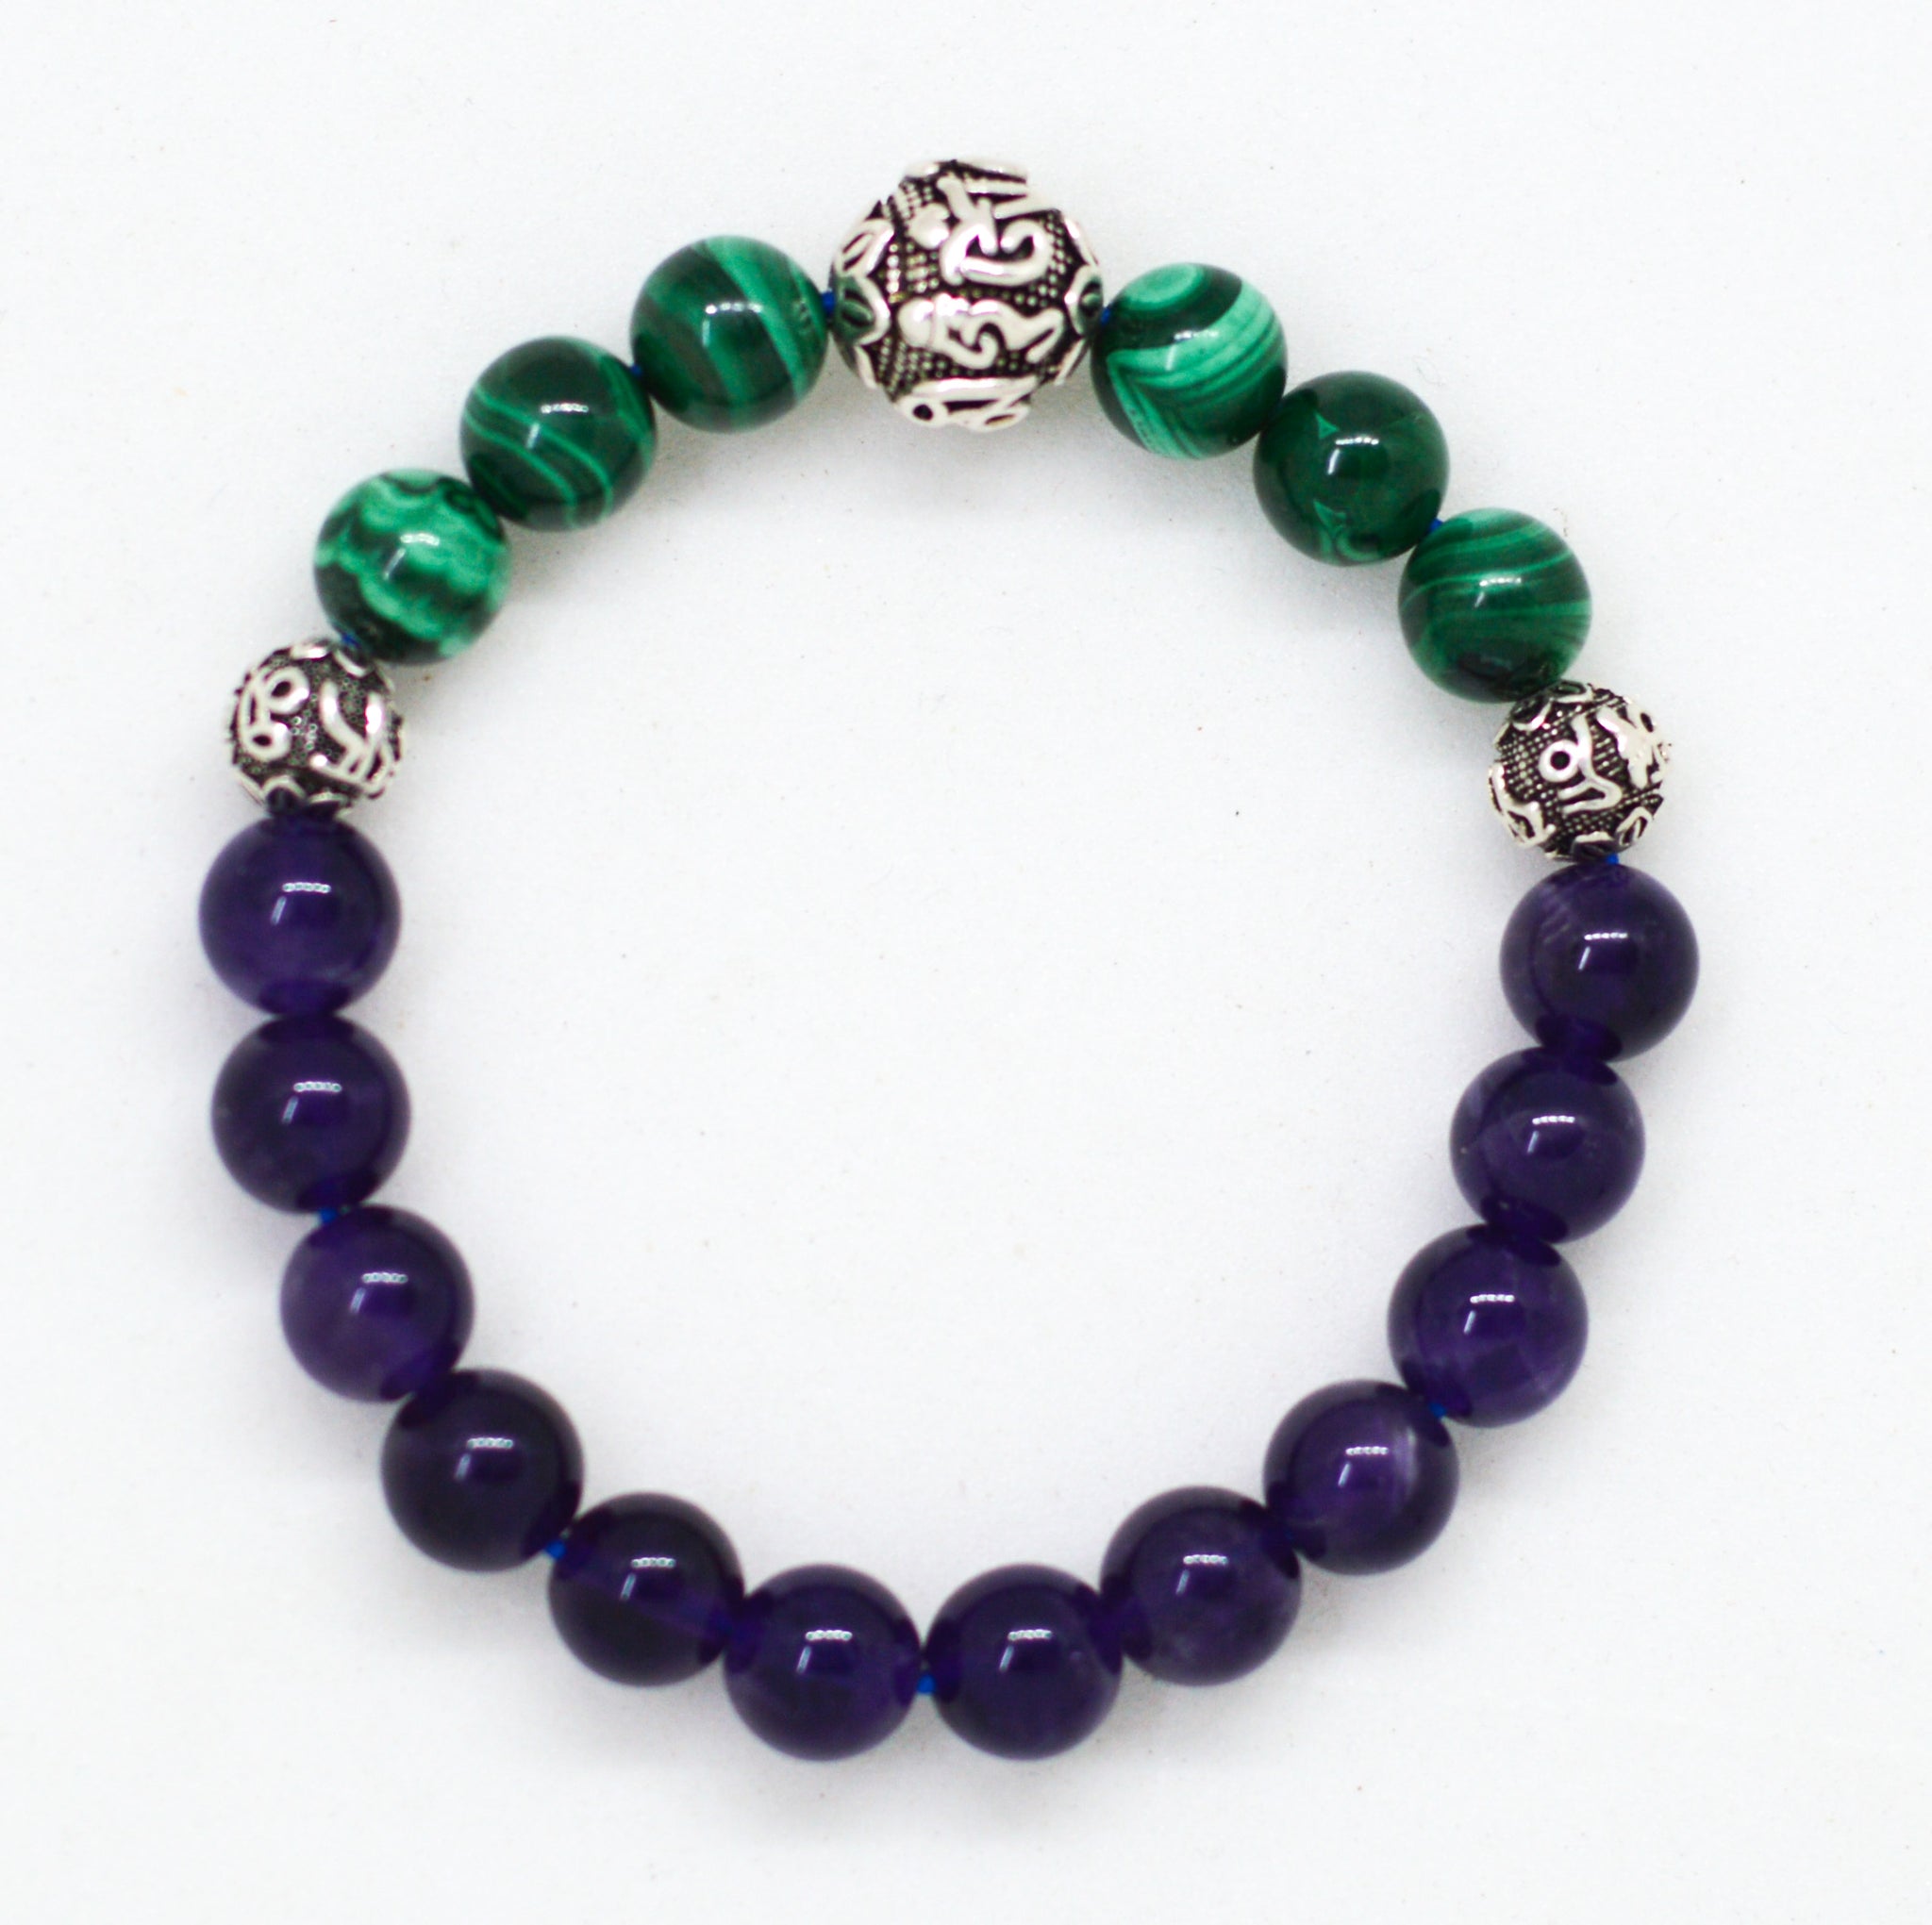 Amethyst Bracelet for Peace & Calmness - 4mm Beads - Solacely